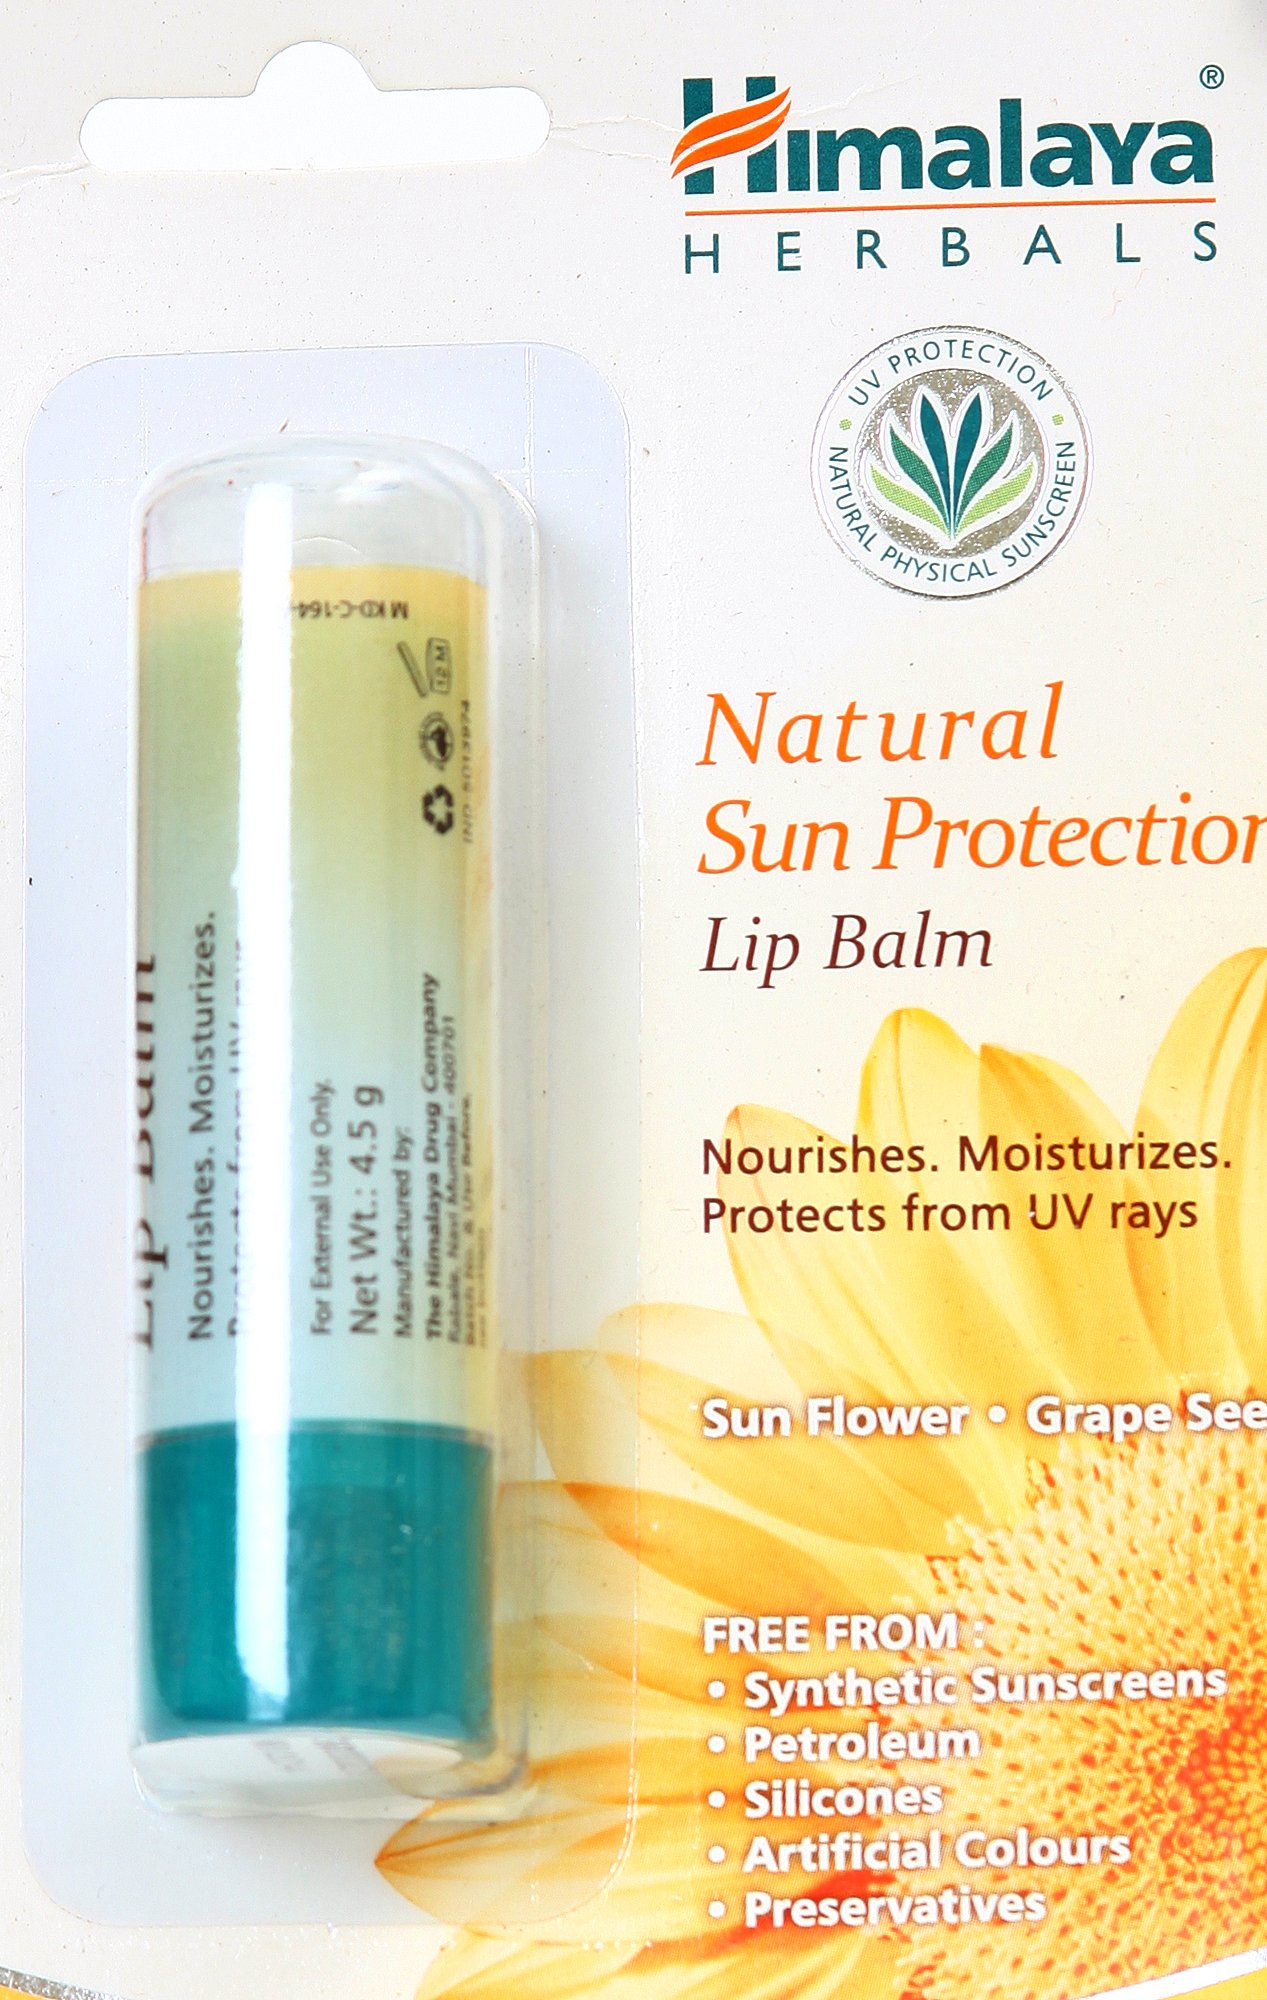 Himalaya Herbals Natural Sun Protection Lip Balm - book cover